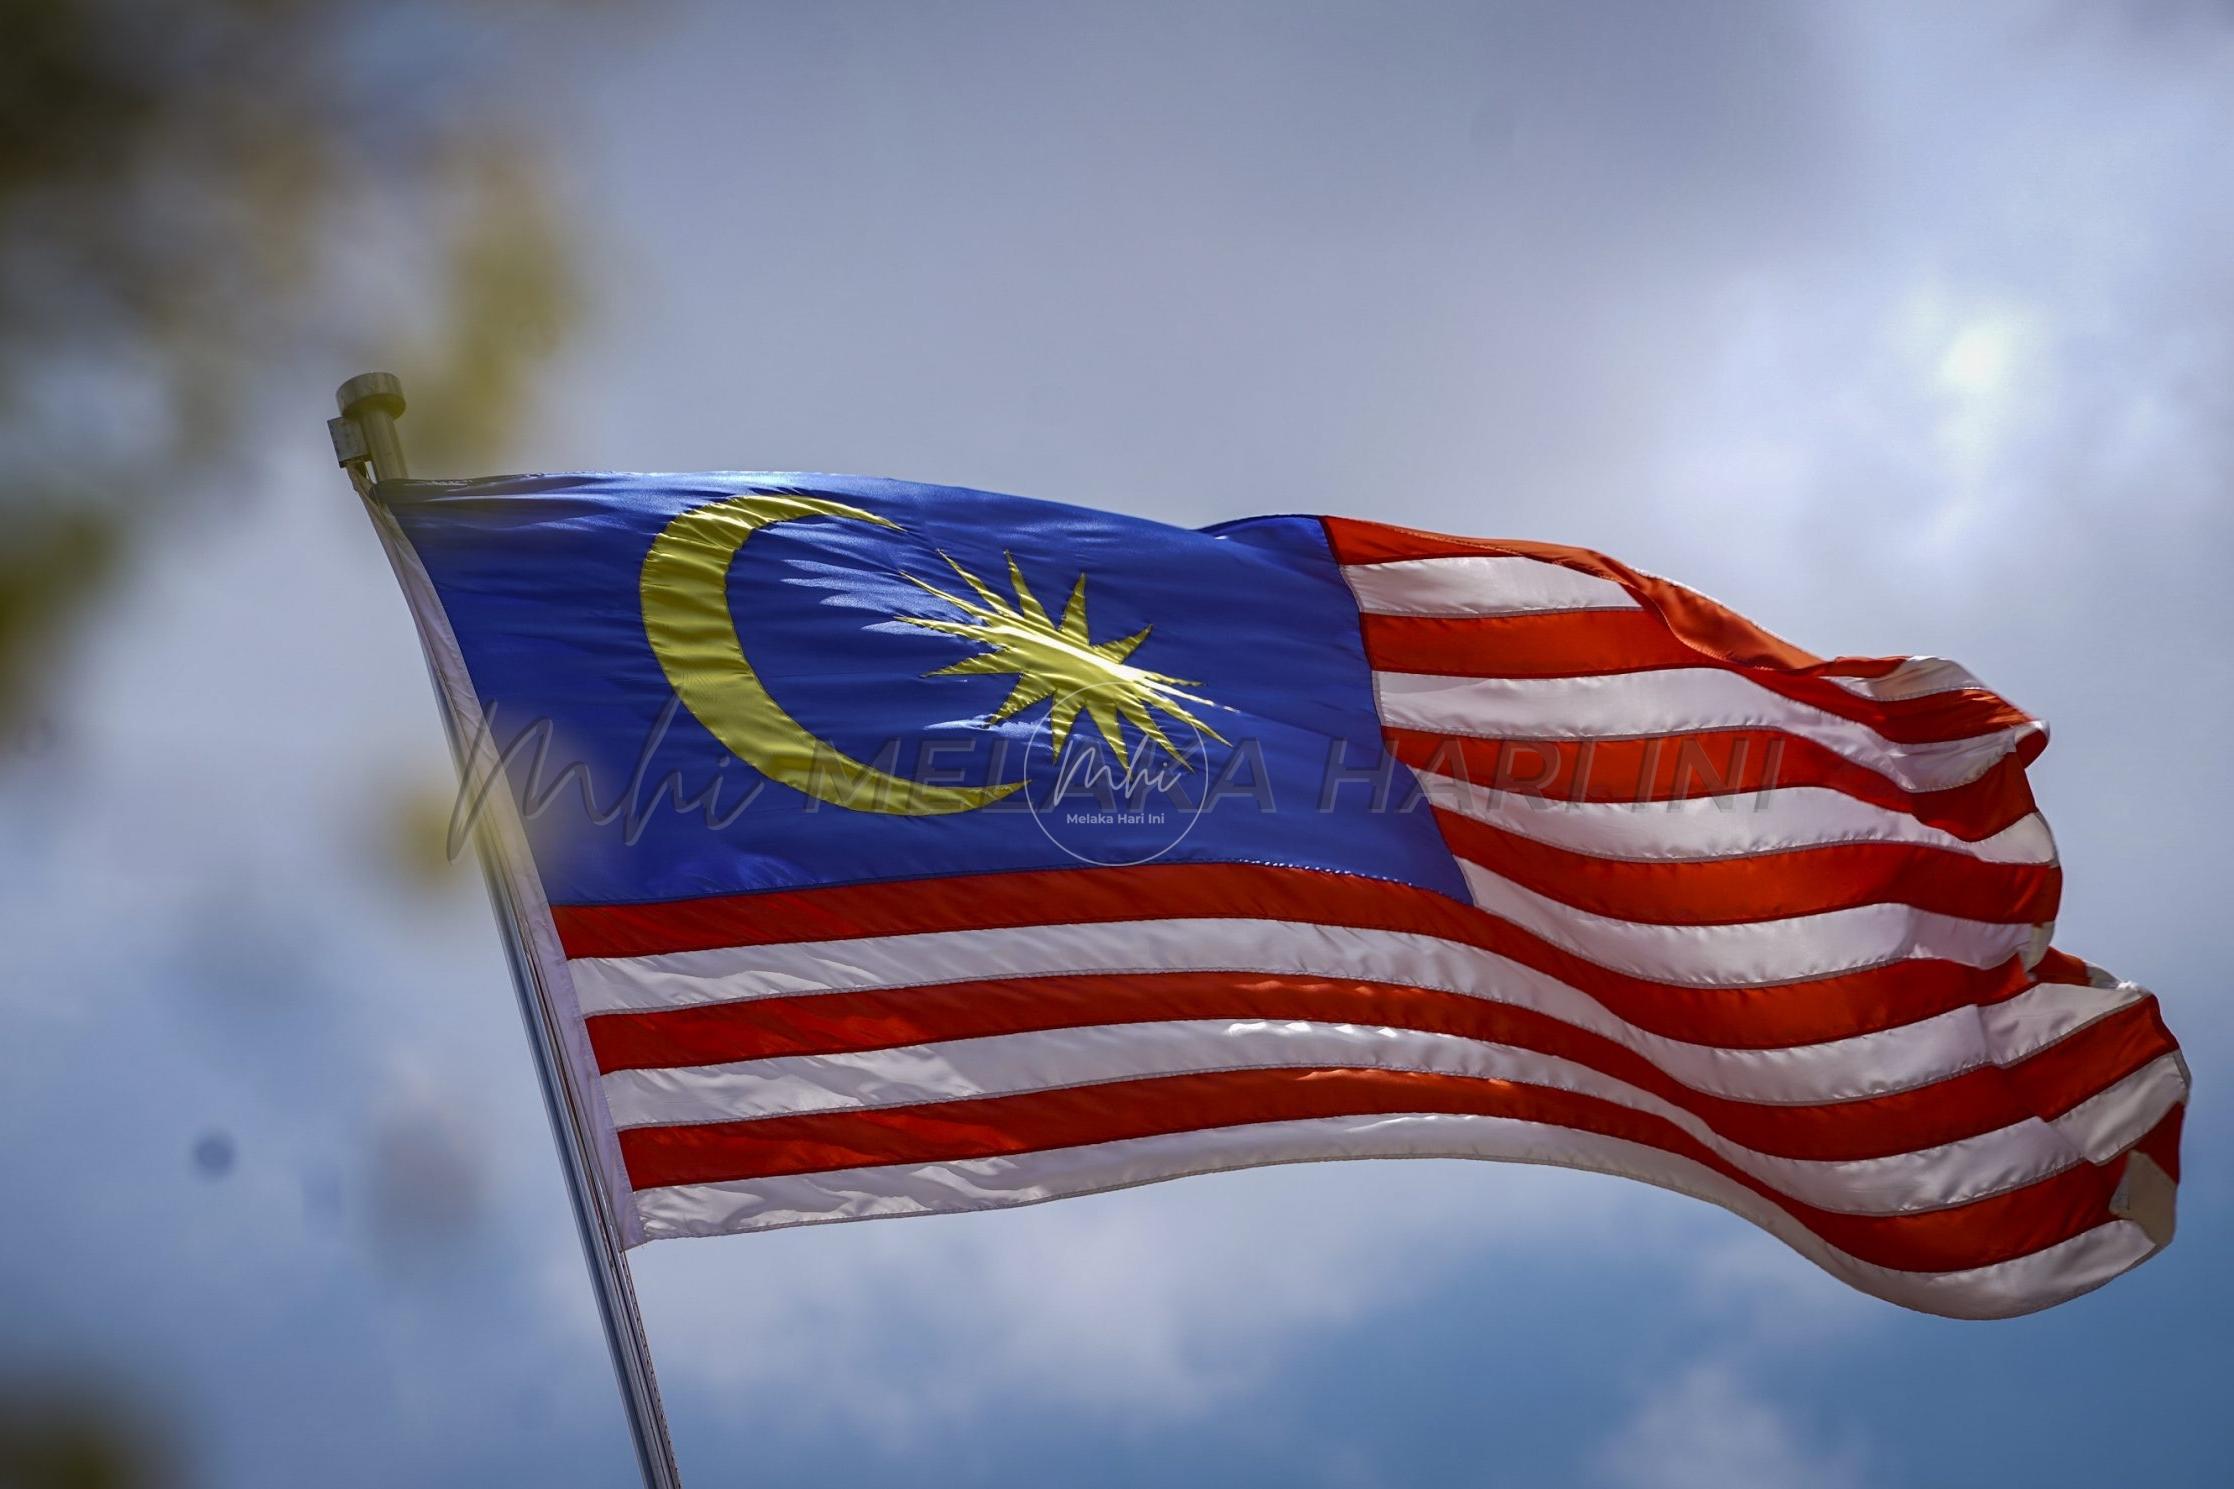 Ancaman Israel: Malaysia pandang serius, tidak gentar